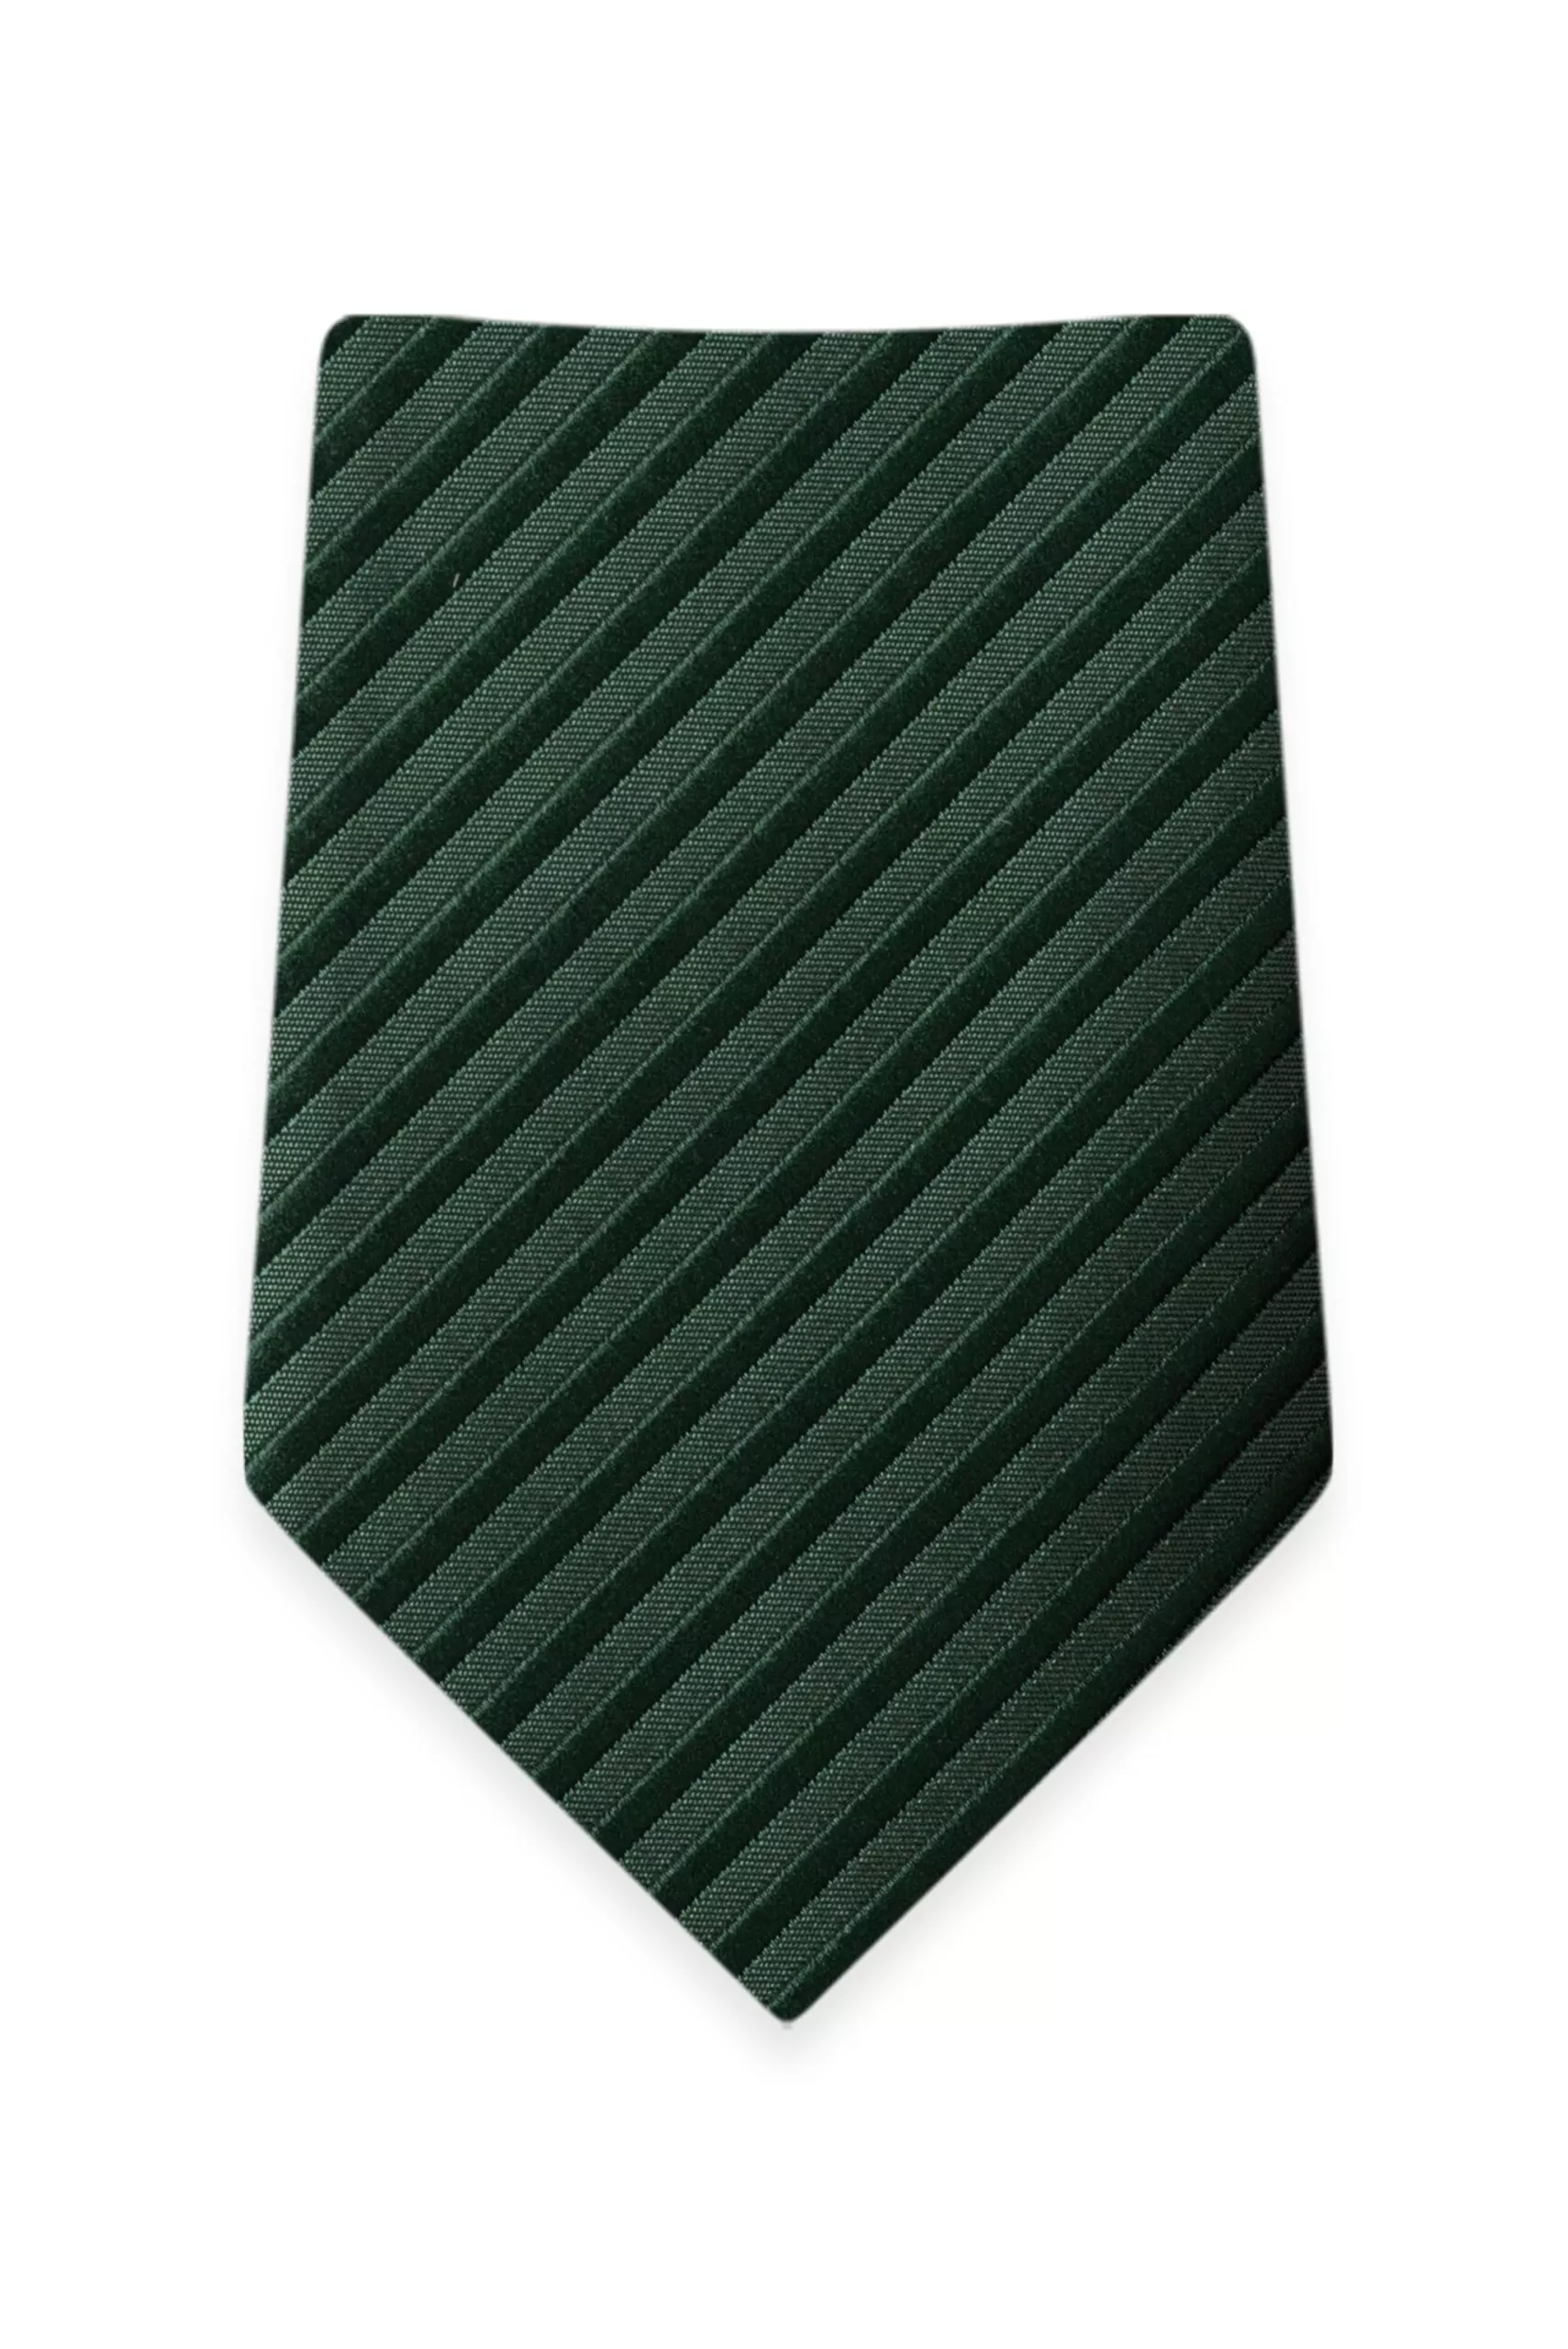 Striped Forest Self-Tie Windsor Tie 1